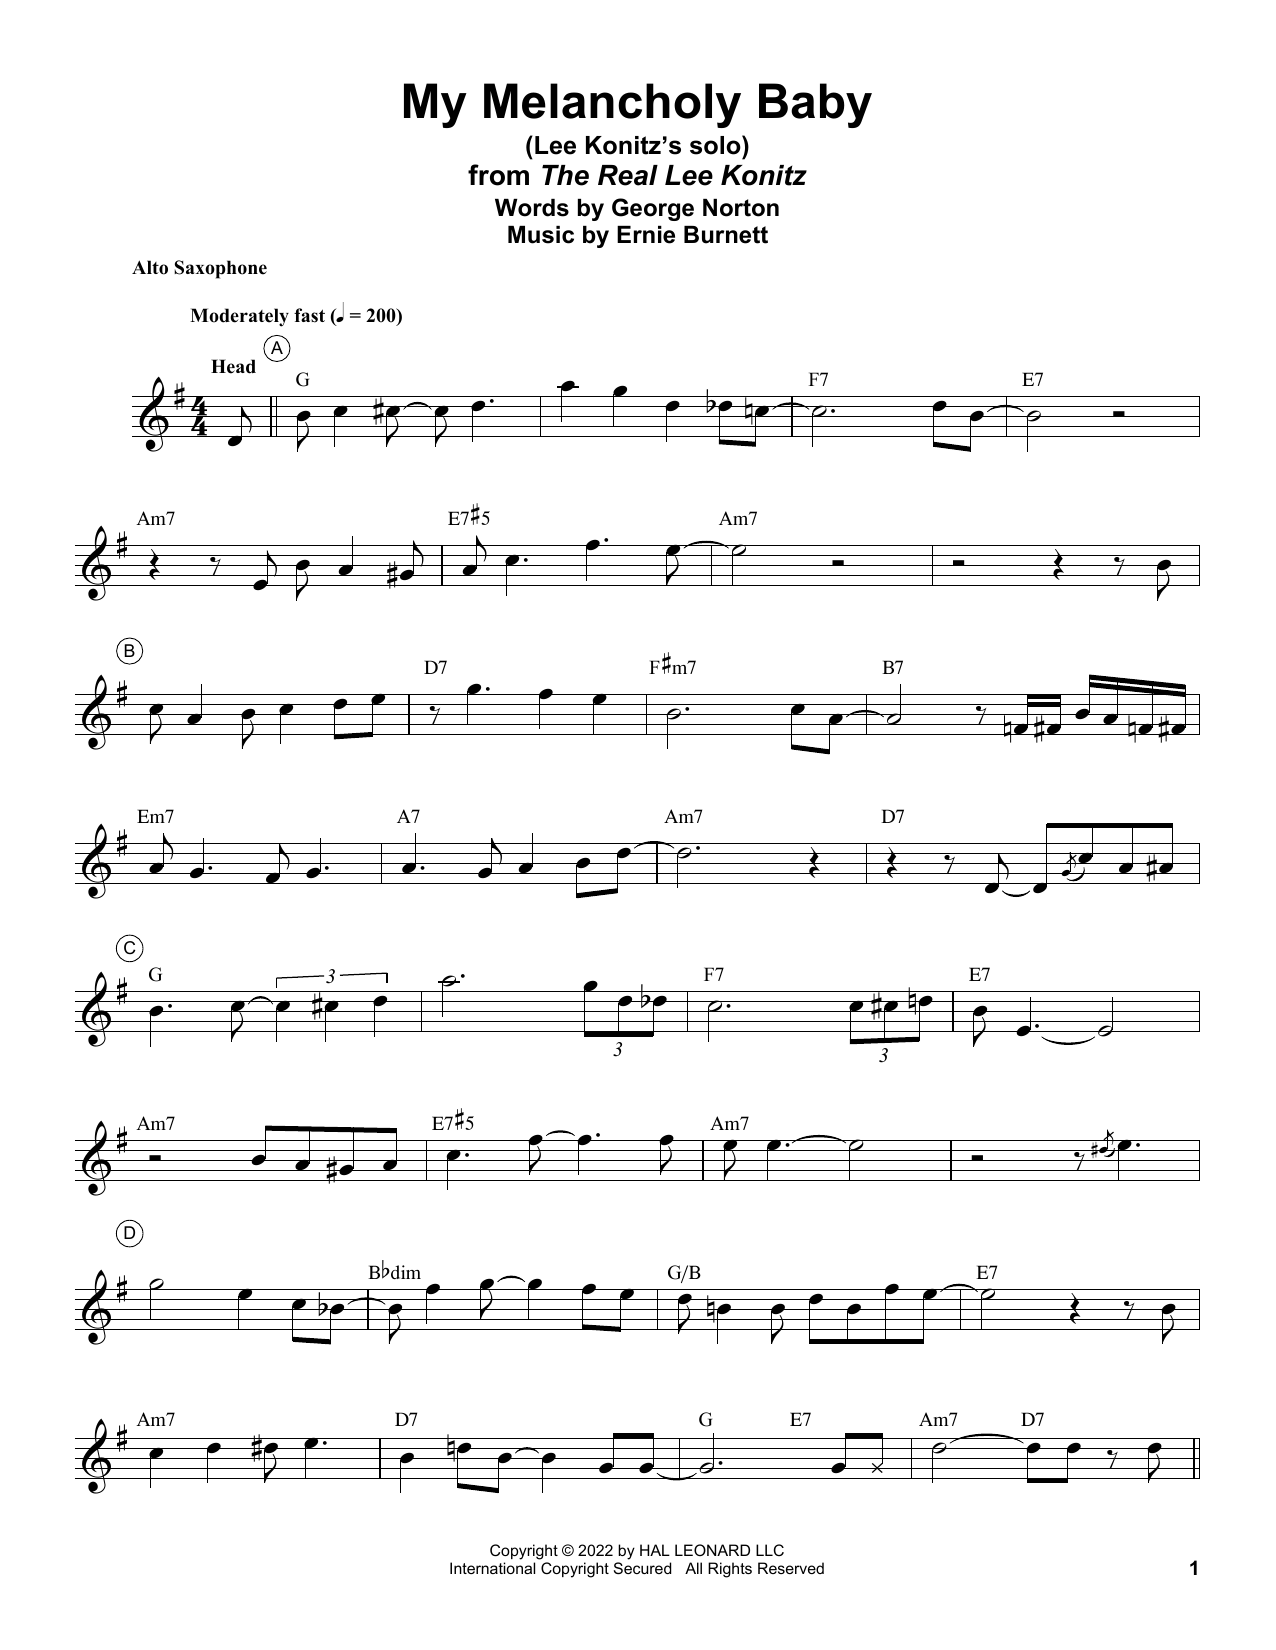 Lee Konitz My Melancholy Baby Sheet Music Notes & Chords for Alto Sax Transcription - Download or Print PDF